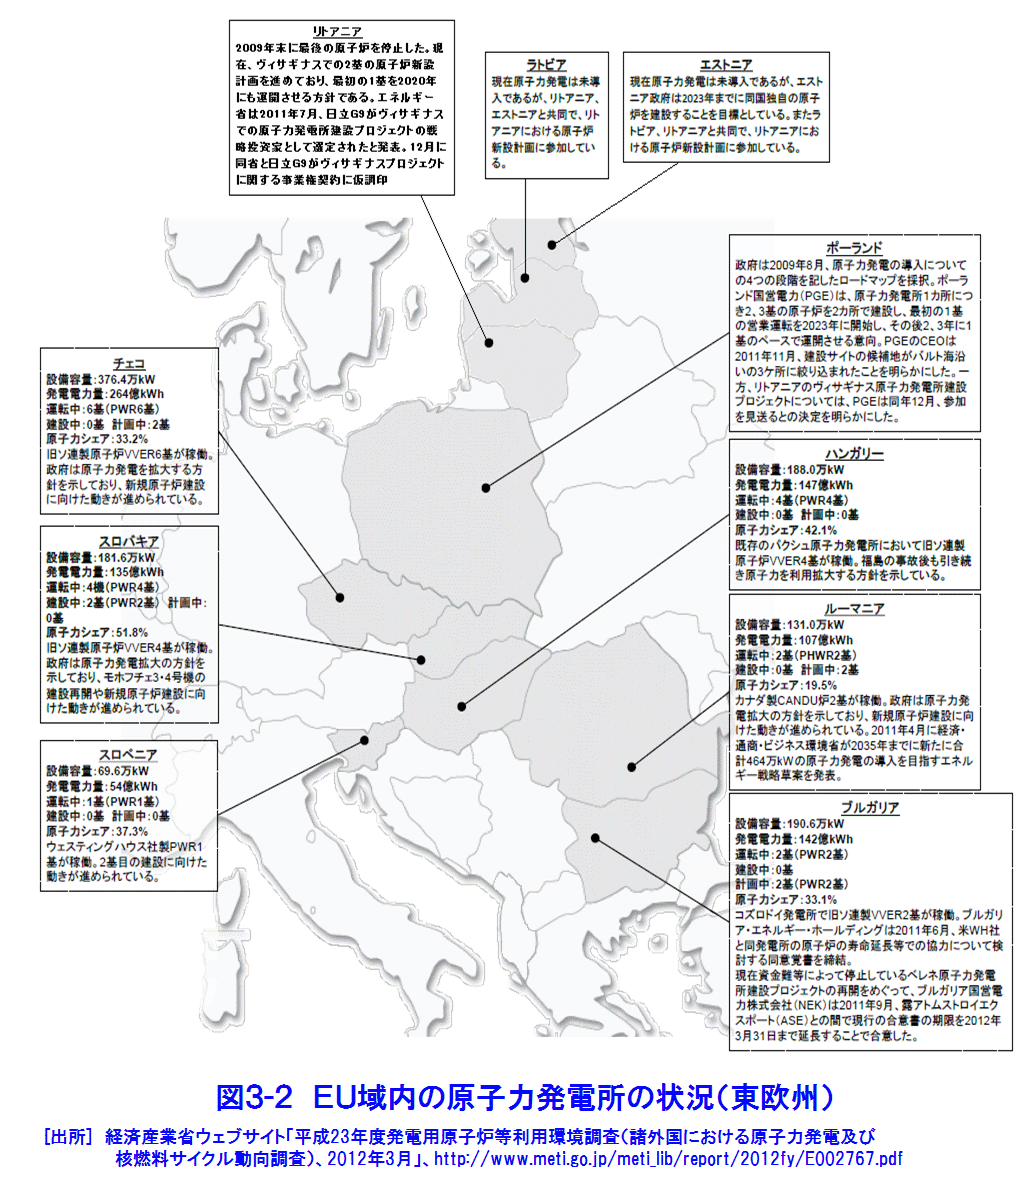 EU域内の原子力発電所の状況（東欧州）